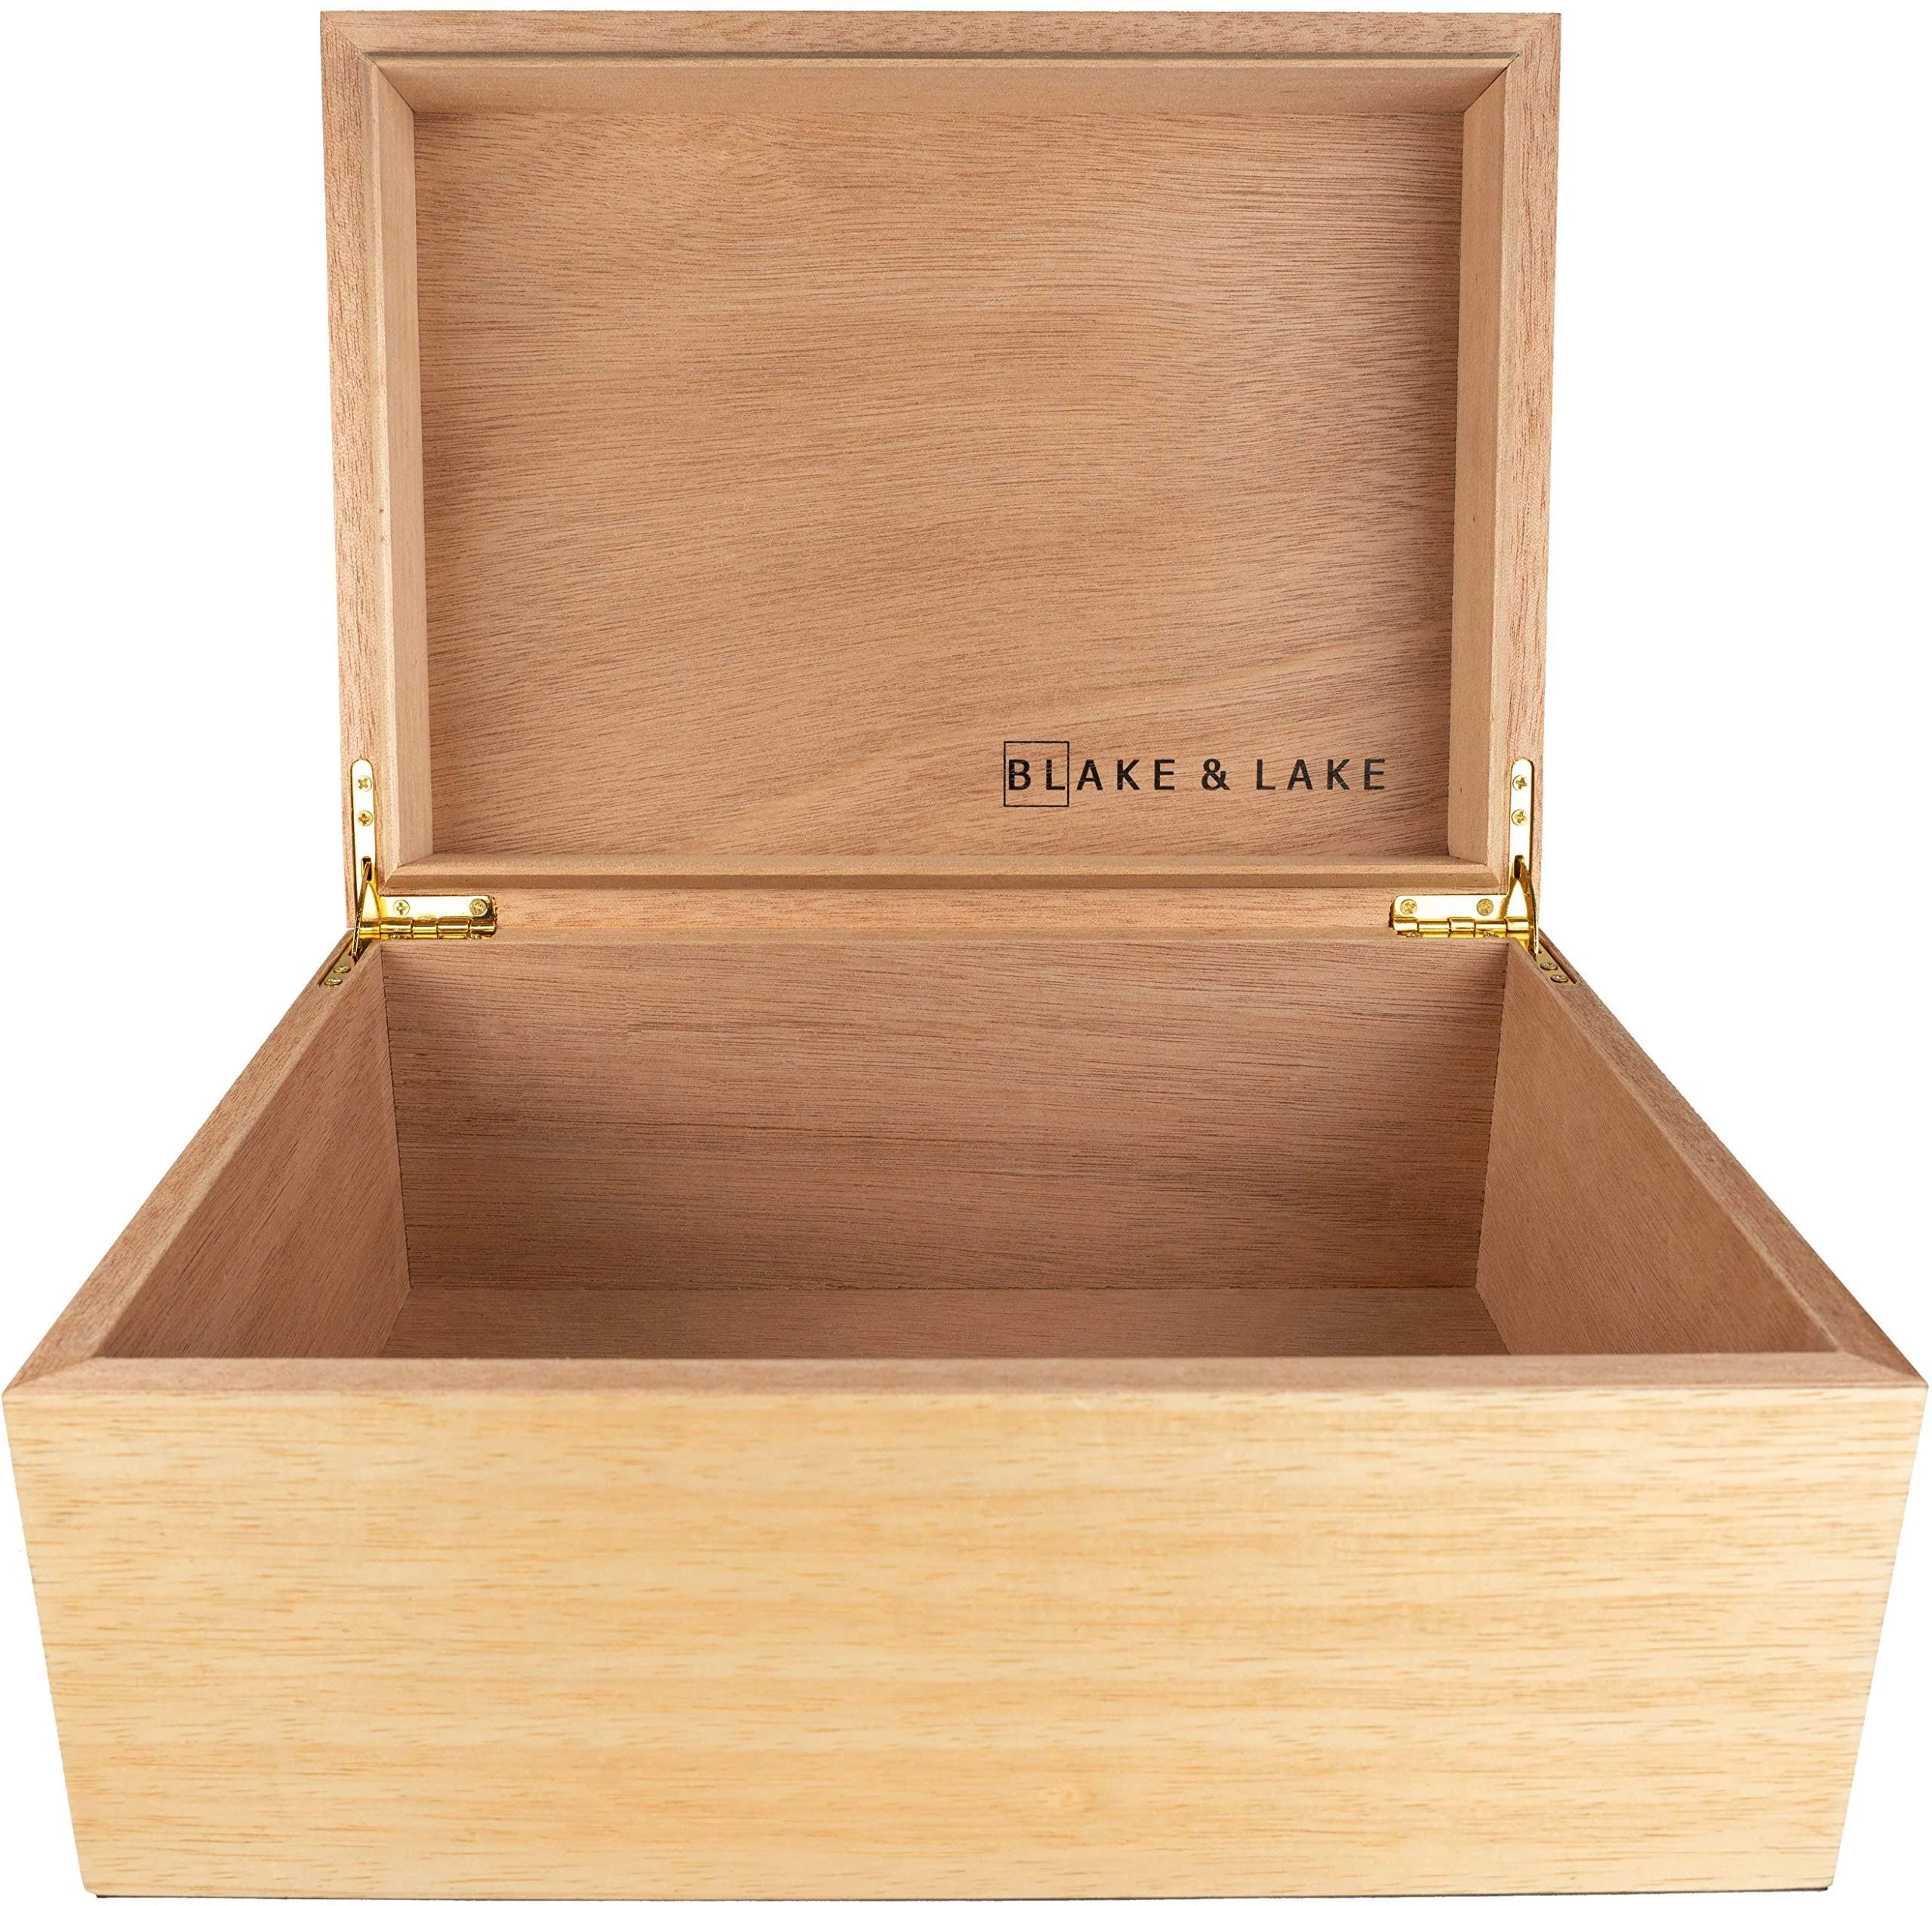 Blake & Lake Large Decorative Treasure Box | Image